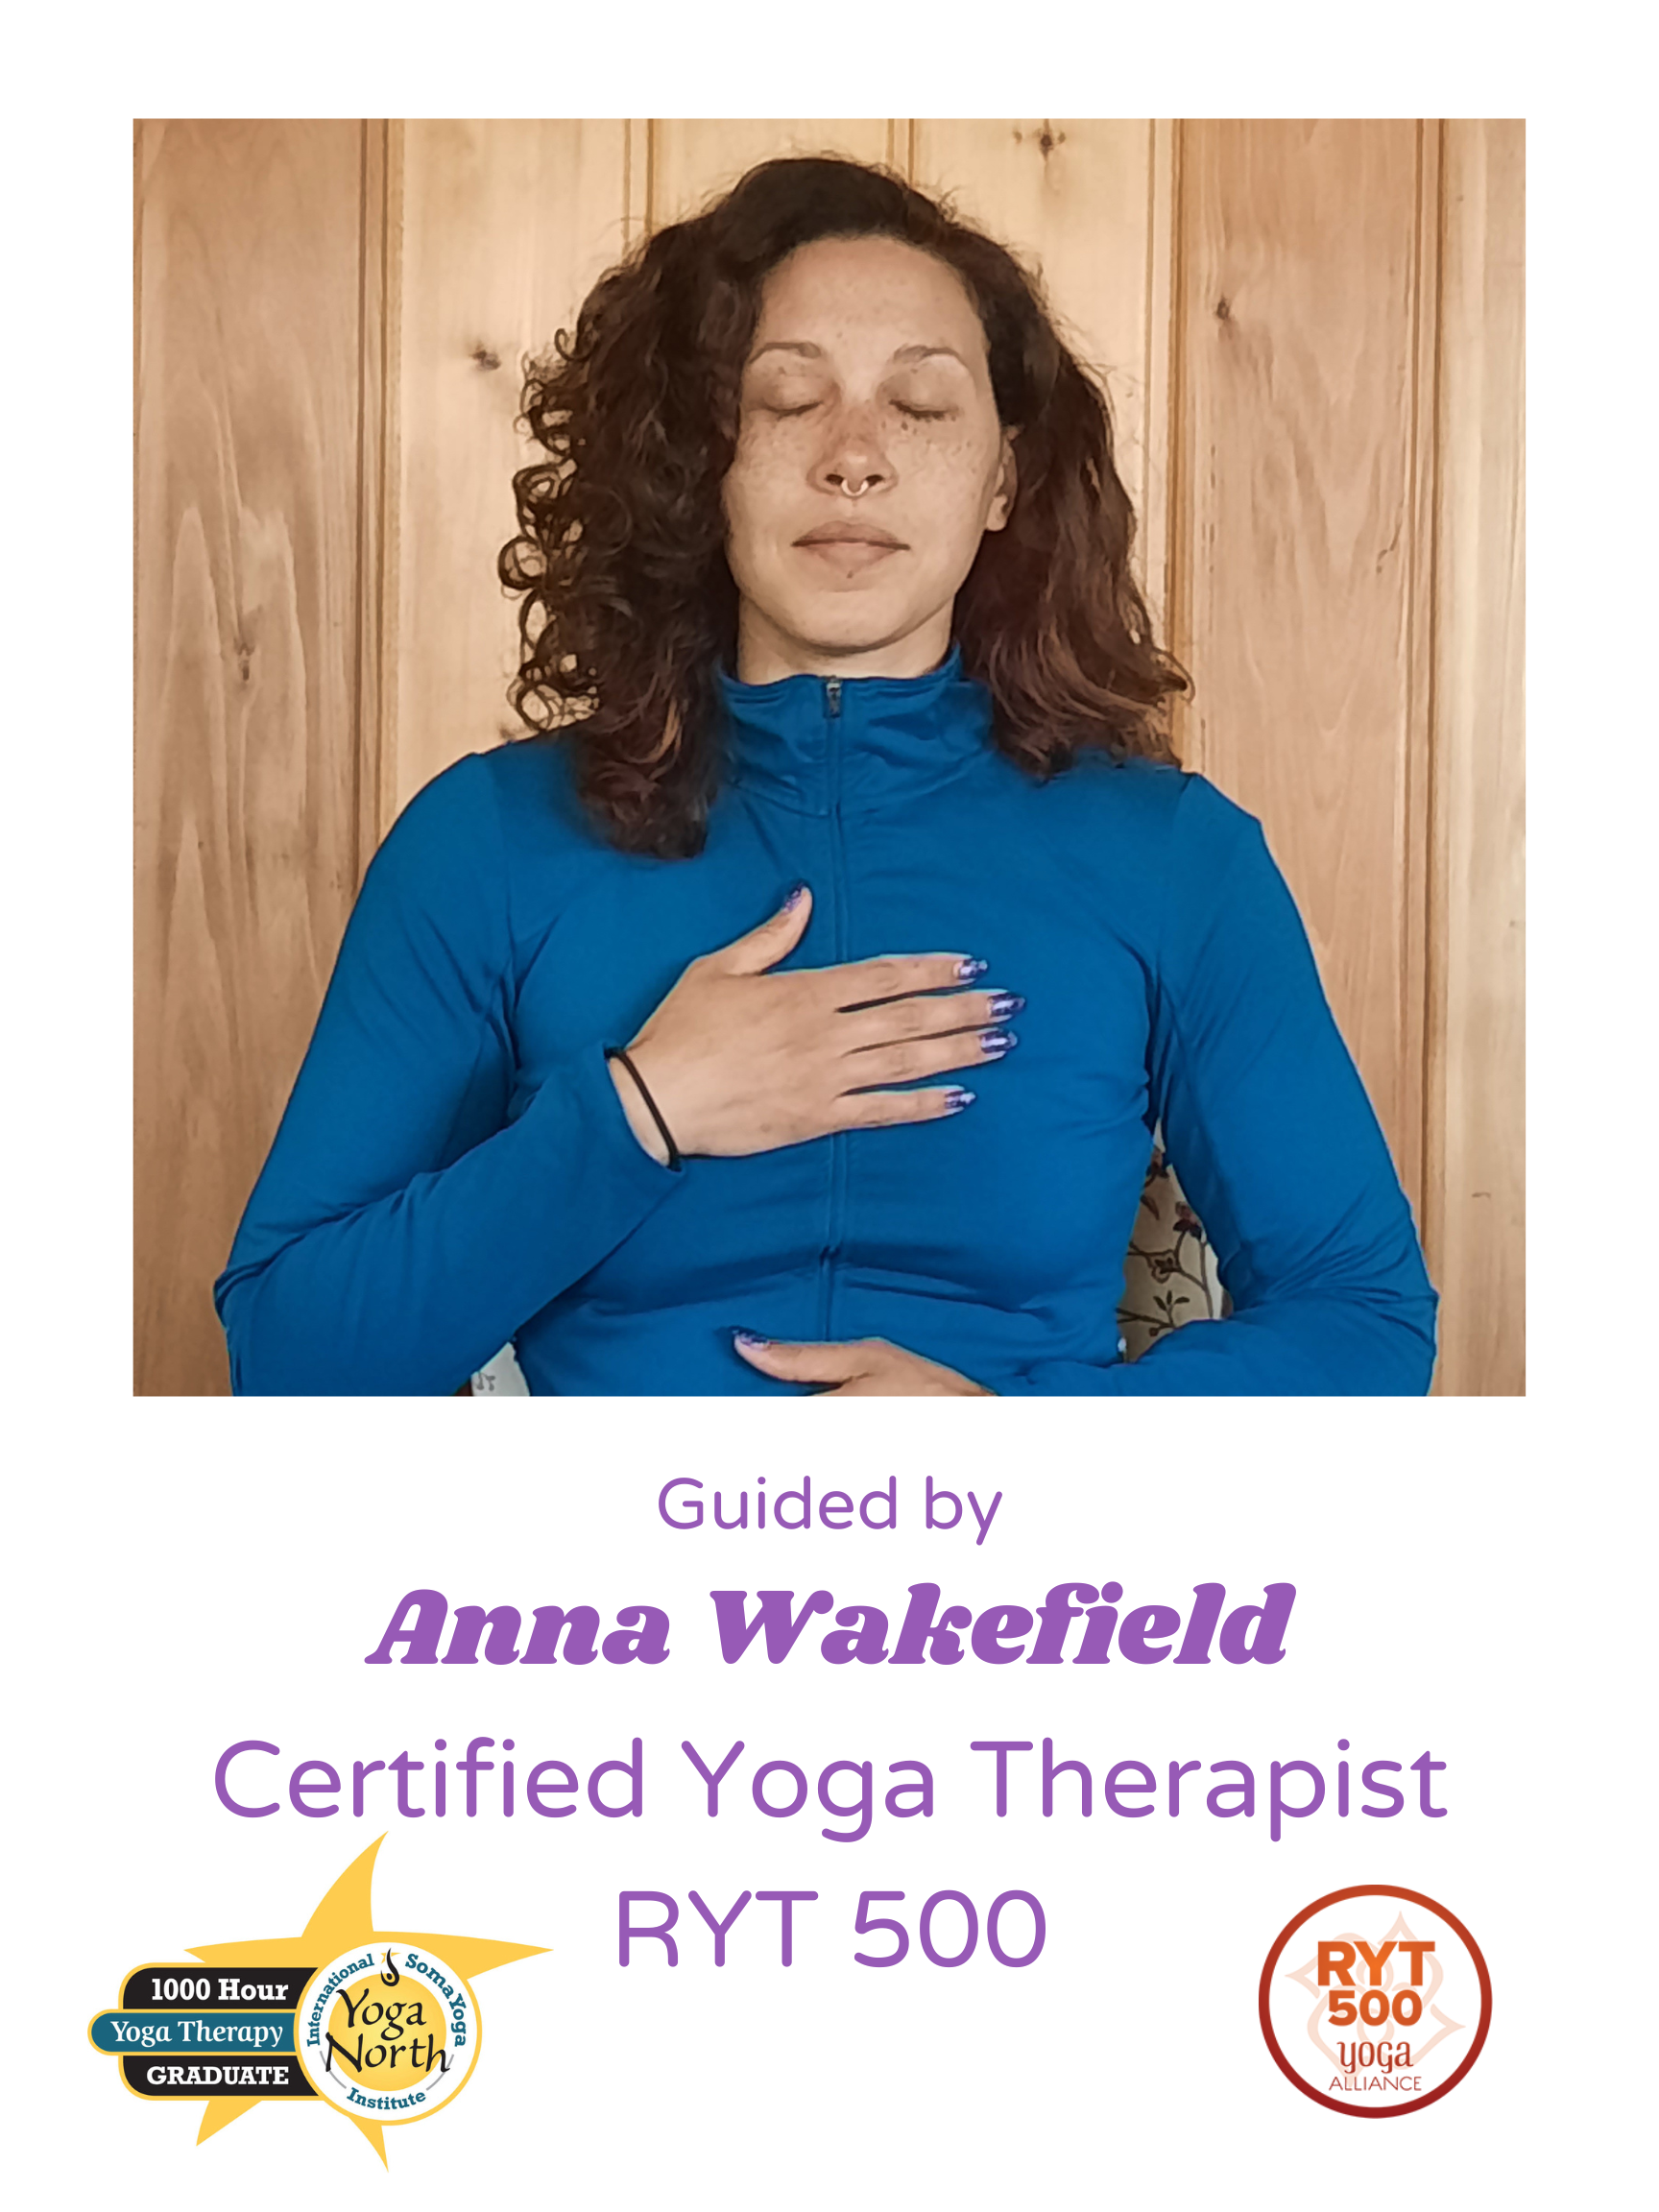 Anna Wakefield - Ceritified Yoga Therapist and Registered Yoga Teacher